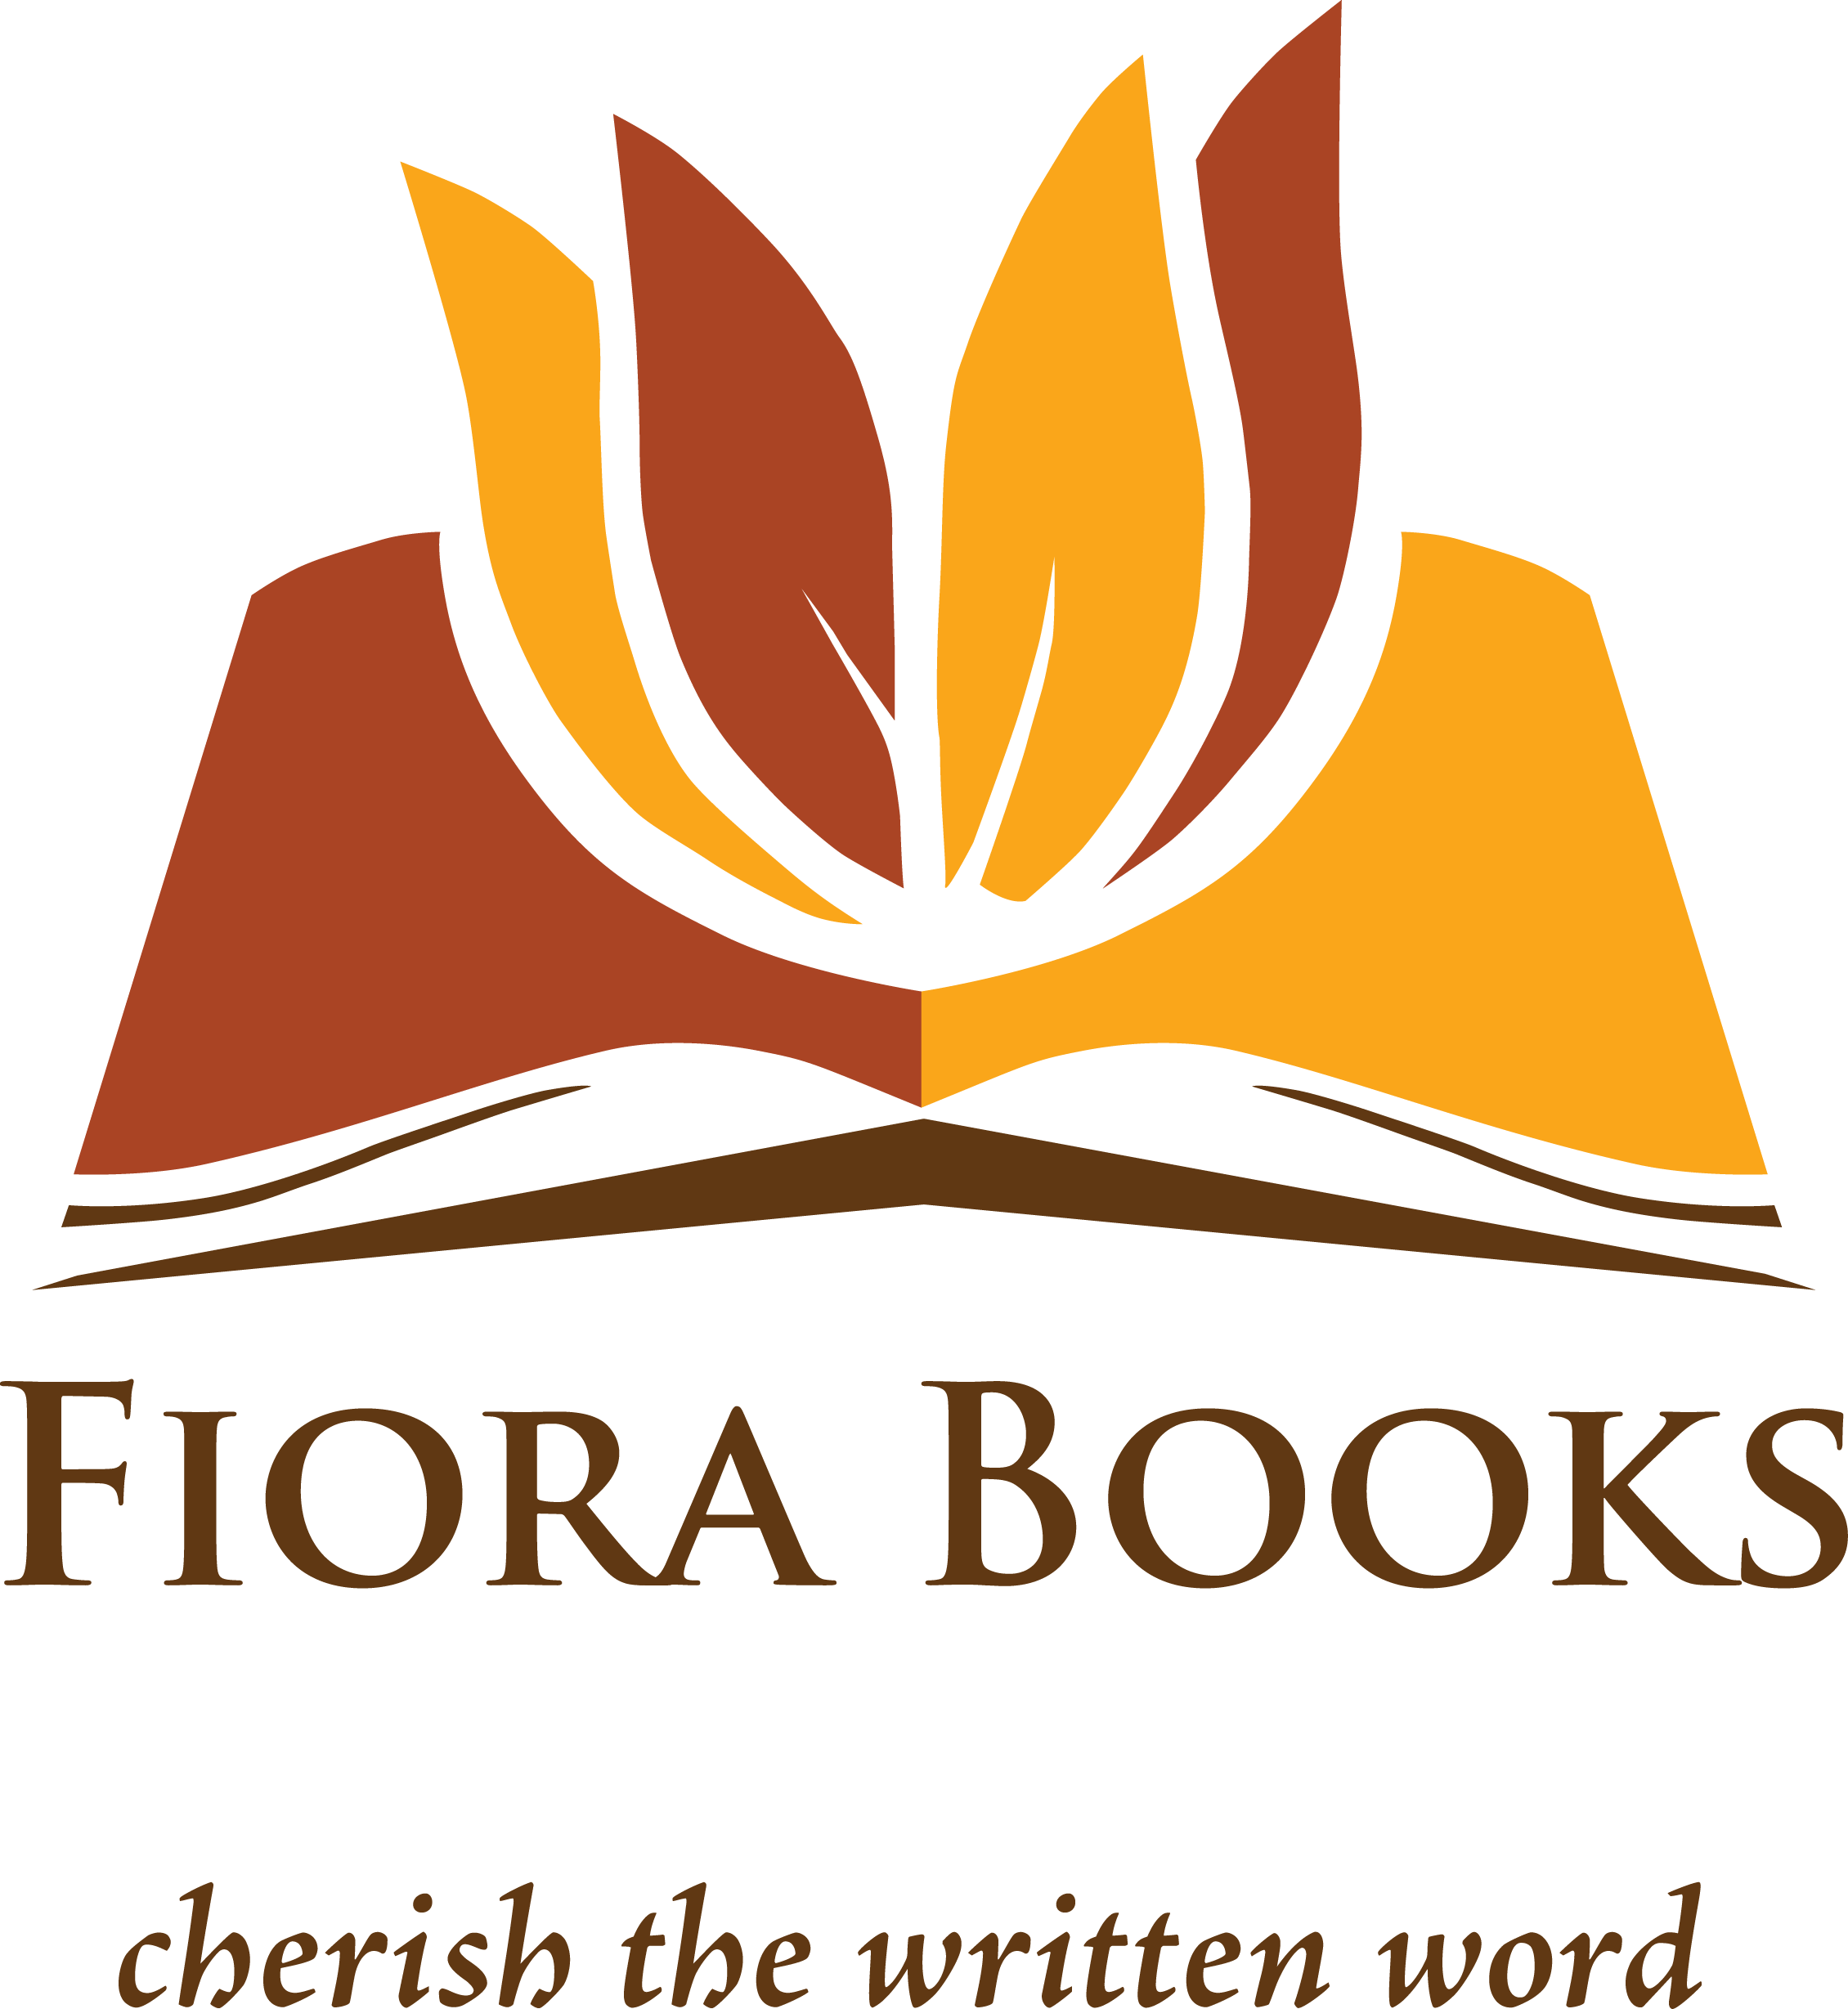  Books  Logos 